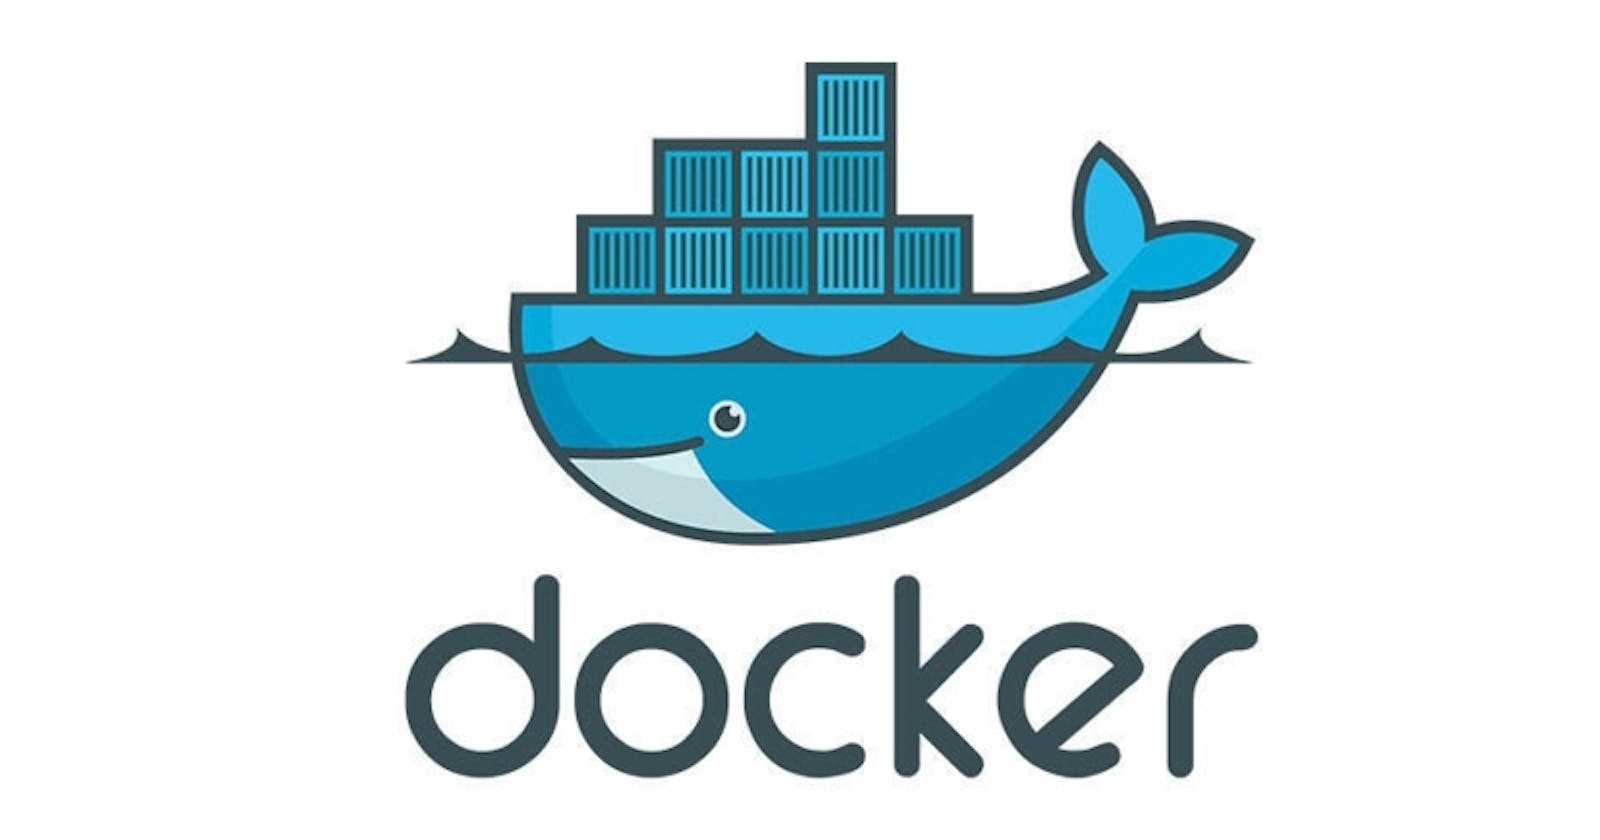 How to remove unused Docker resources